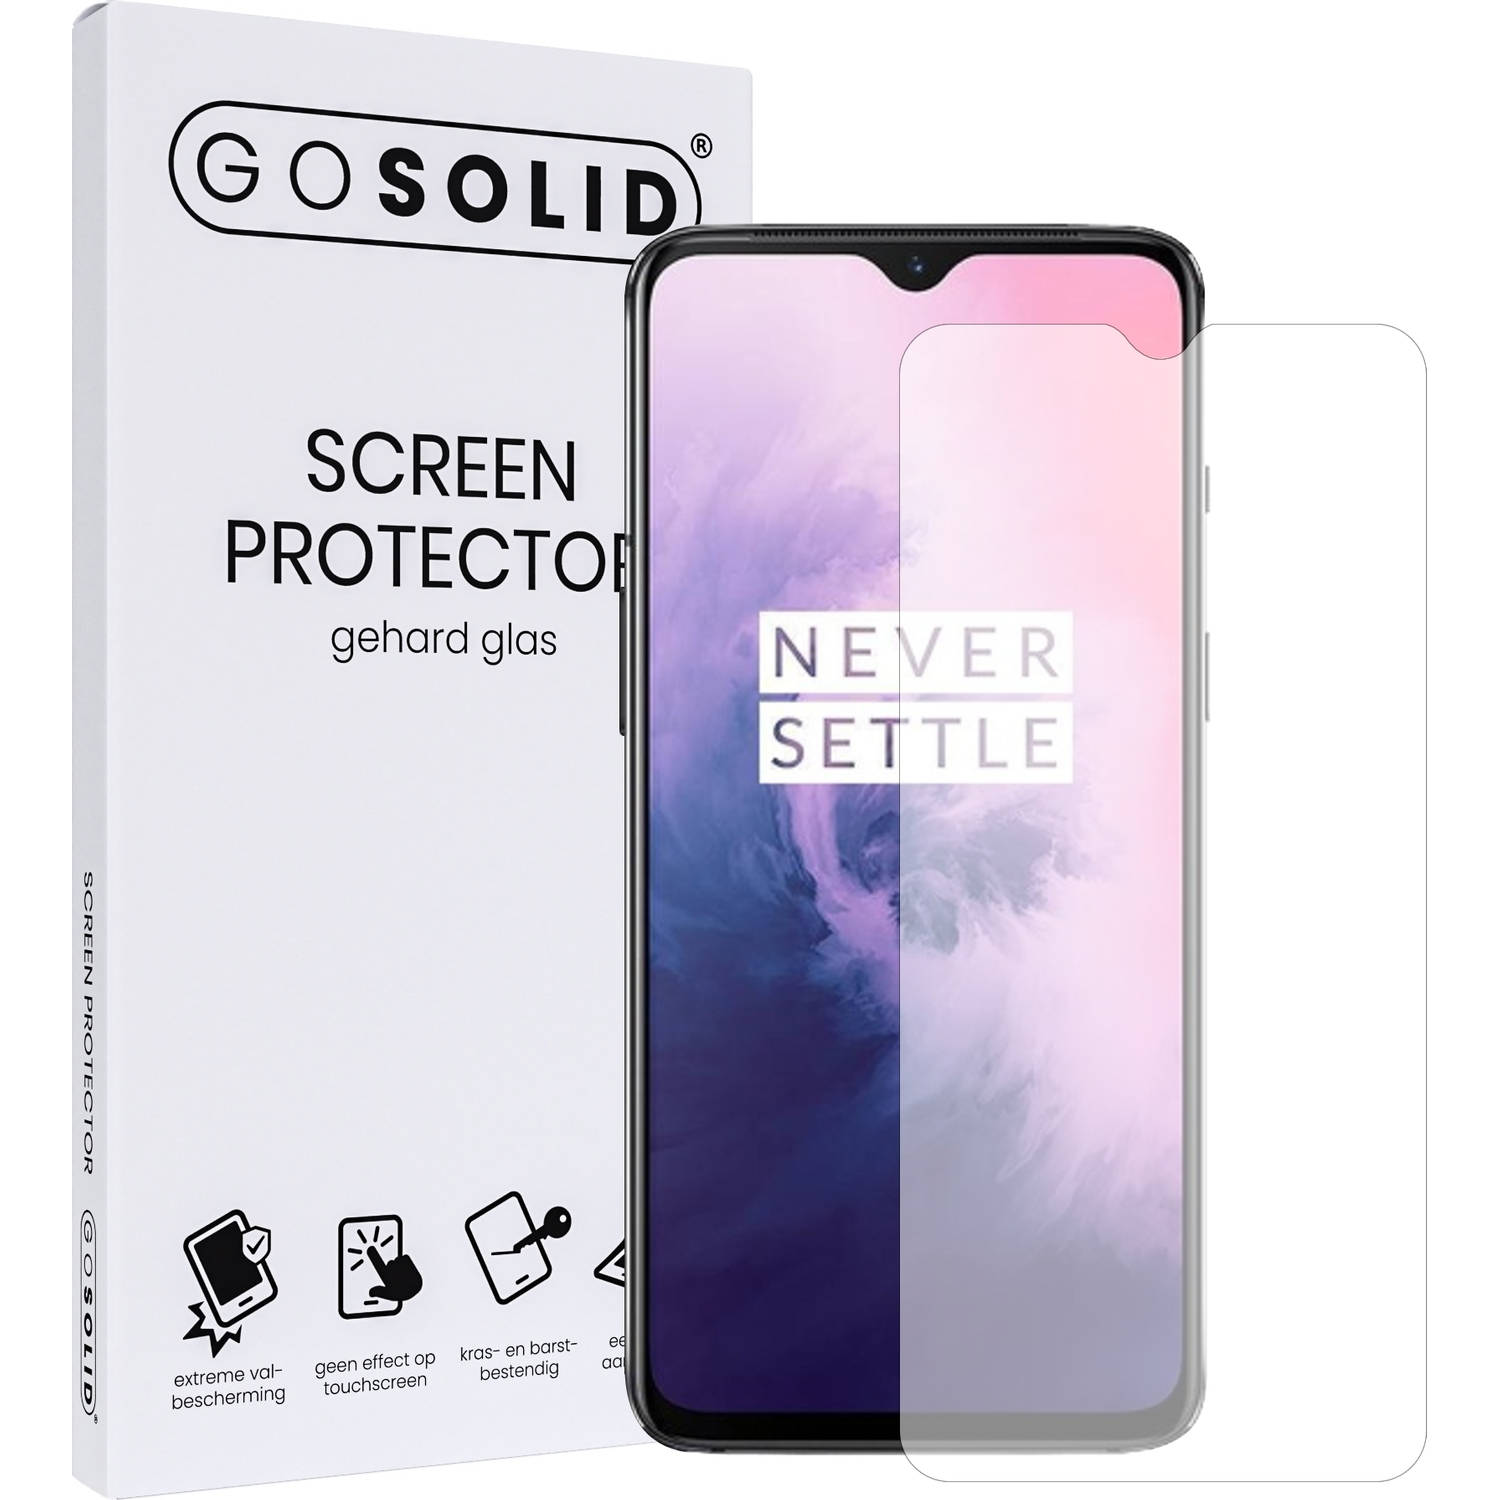 GO SOLID! ® Screenprotector Oneplus 7 - gehard glas